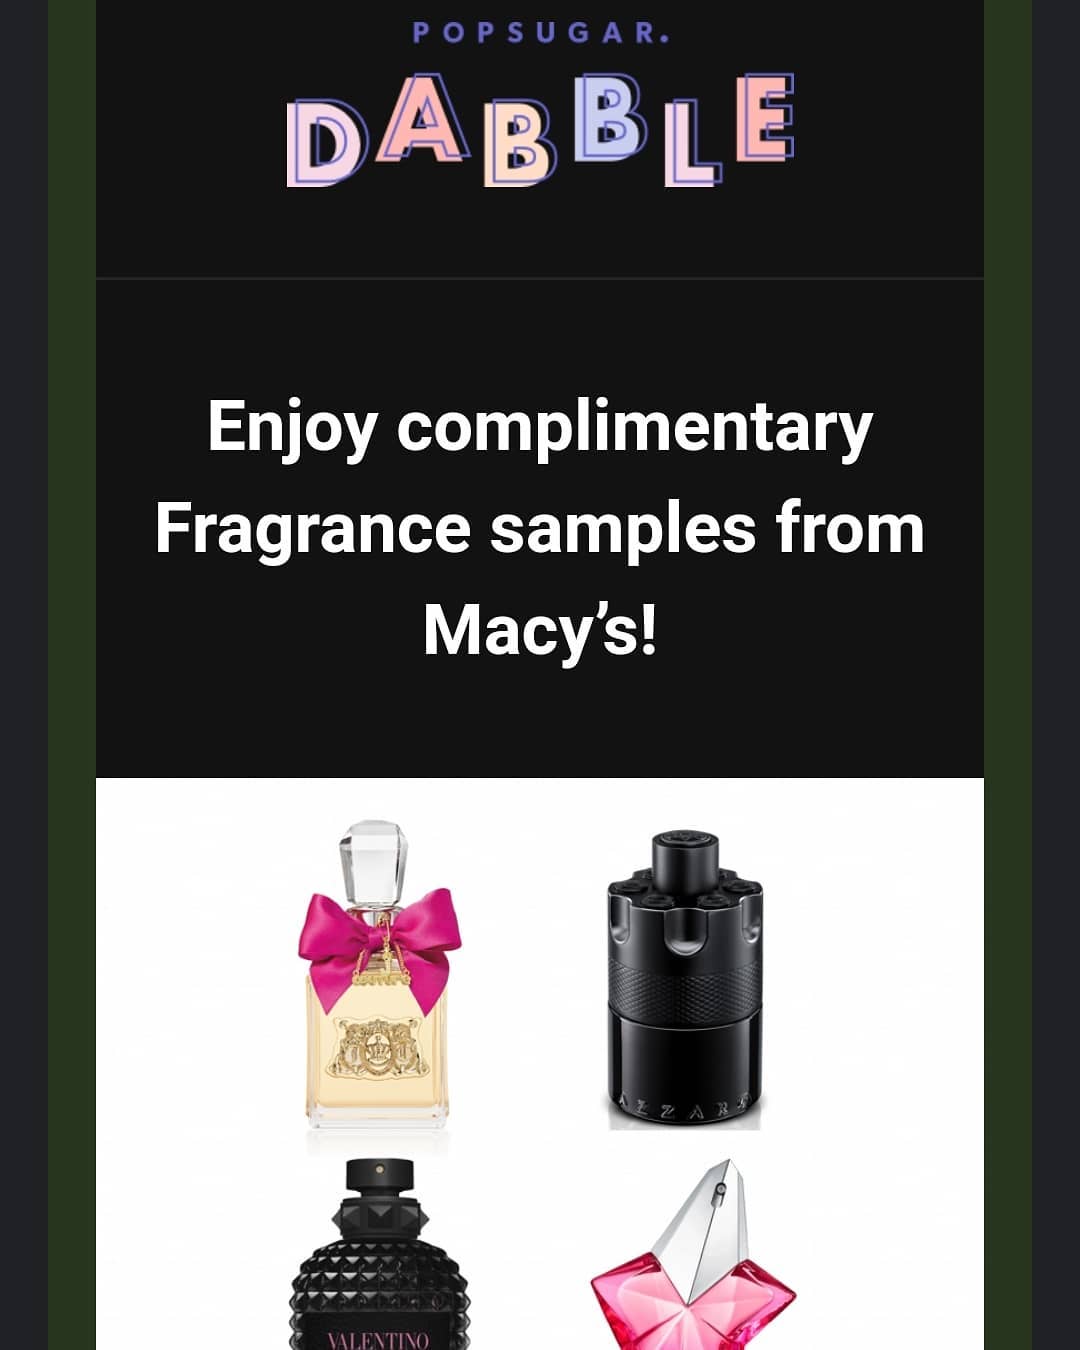 Macys Perfume samples thru Facebook & Popsugar Dabble